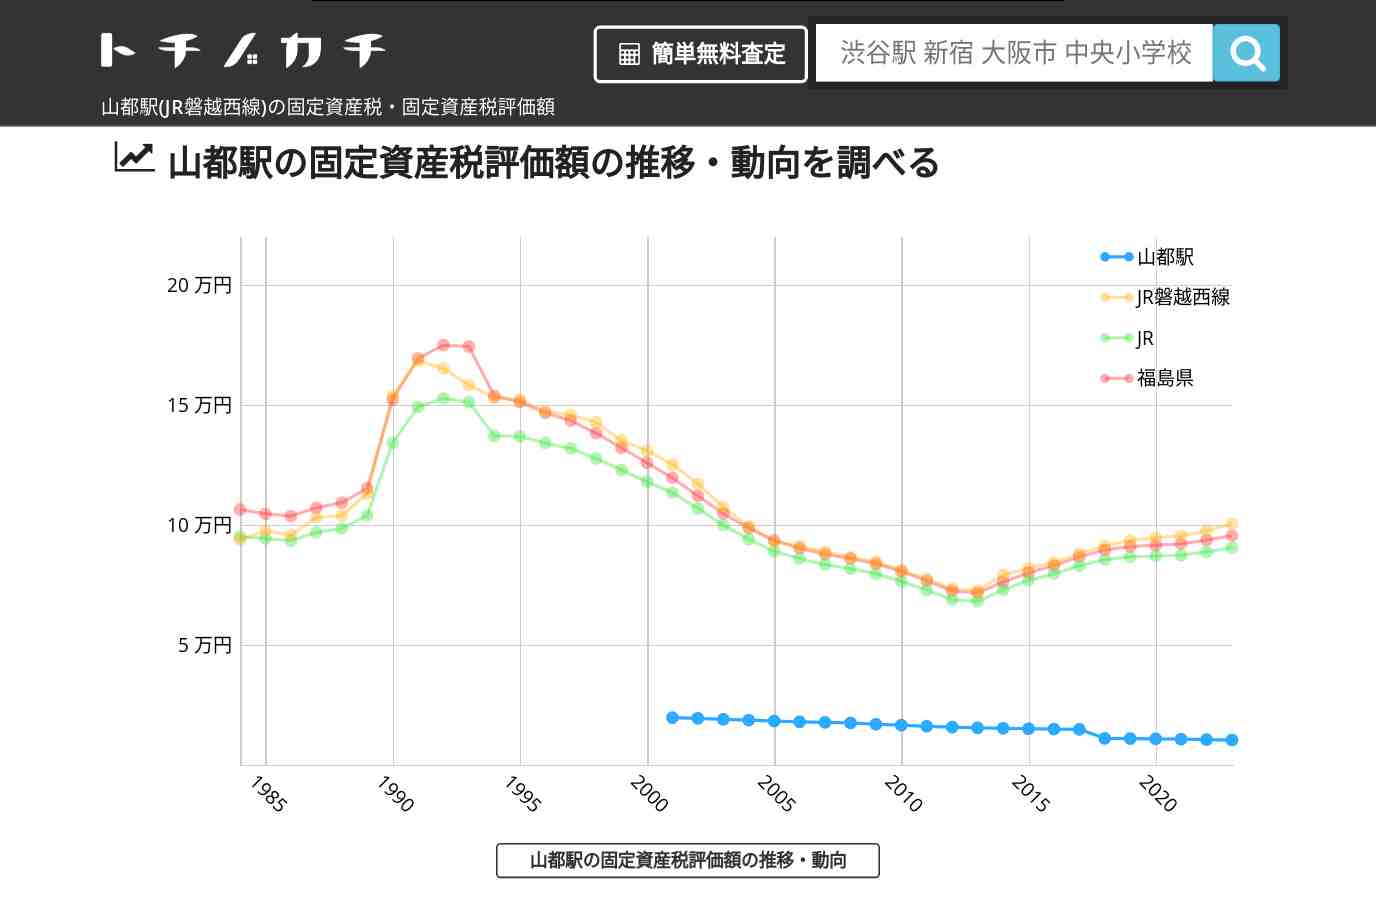 山都駅(JR磐越西線)の固定資産税・固定資産税評価額 | トチノカチ